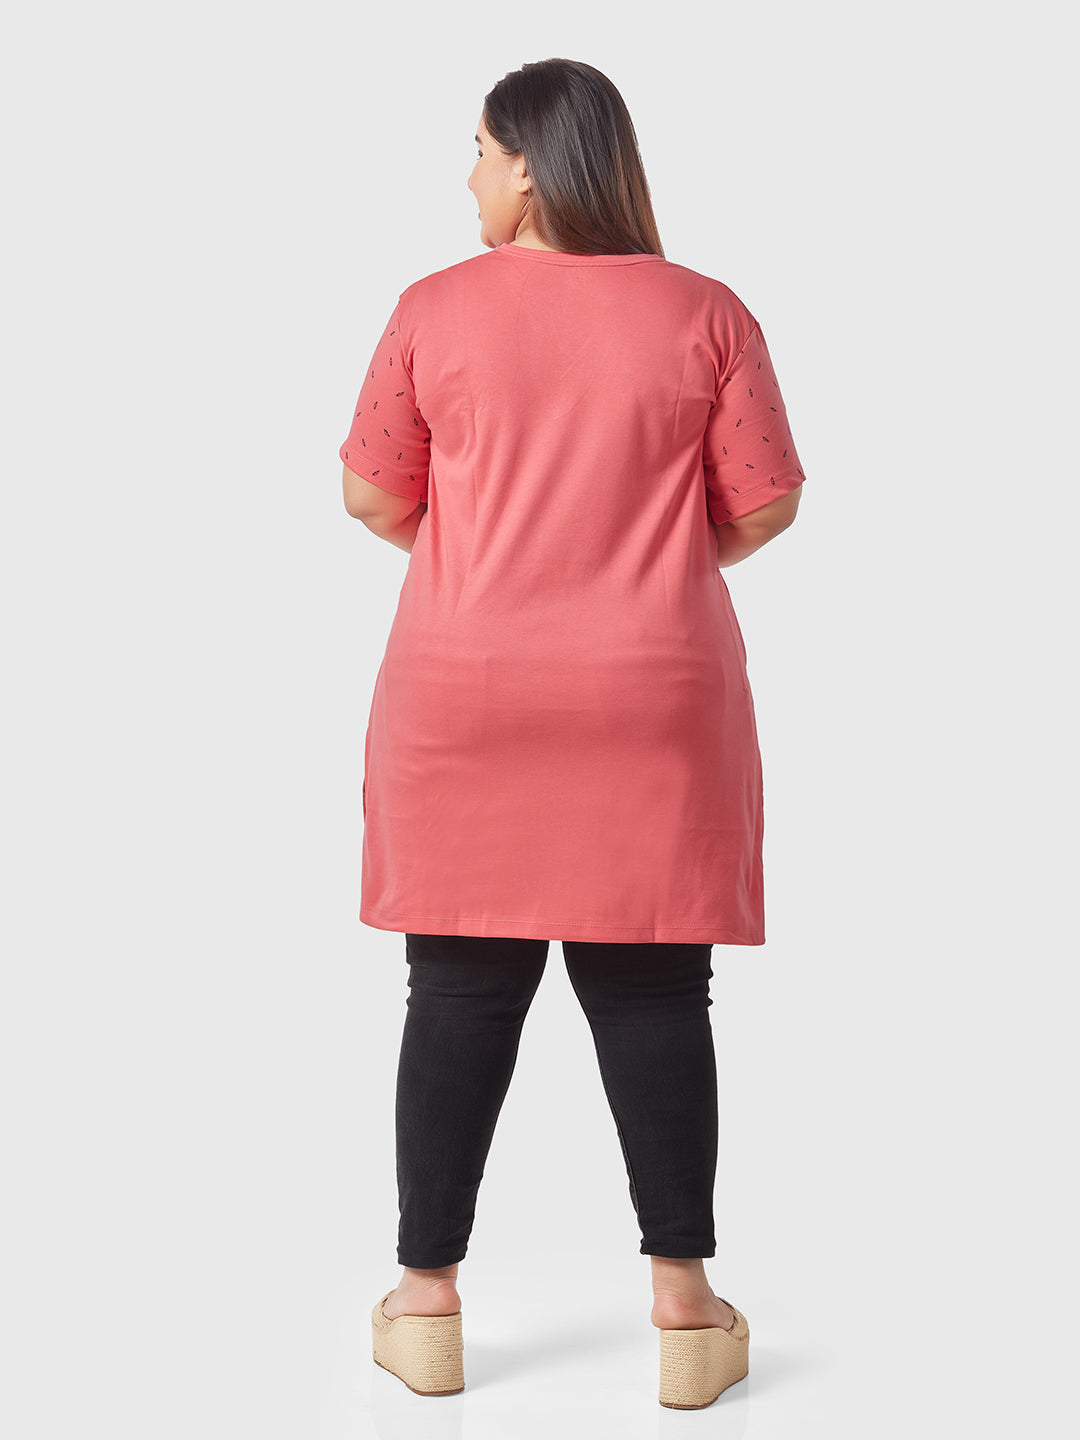 Plus Size Printed Long Tops For Women Cotton Half Sleeves - Pink, गर्ल्स  टॉप - Tanya Enterprises, Ludhiana